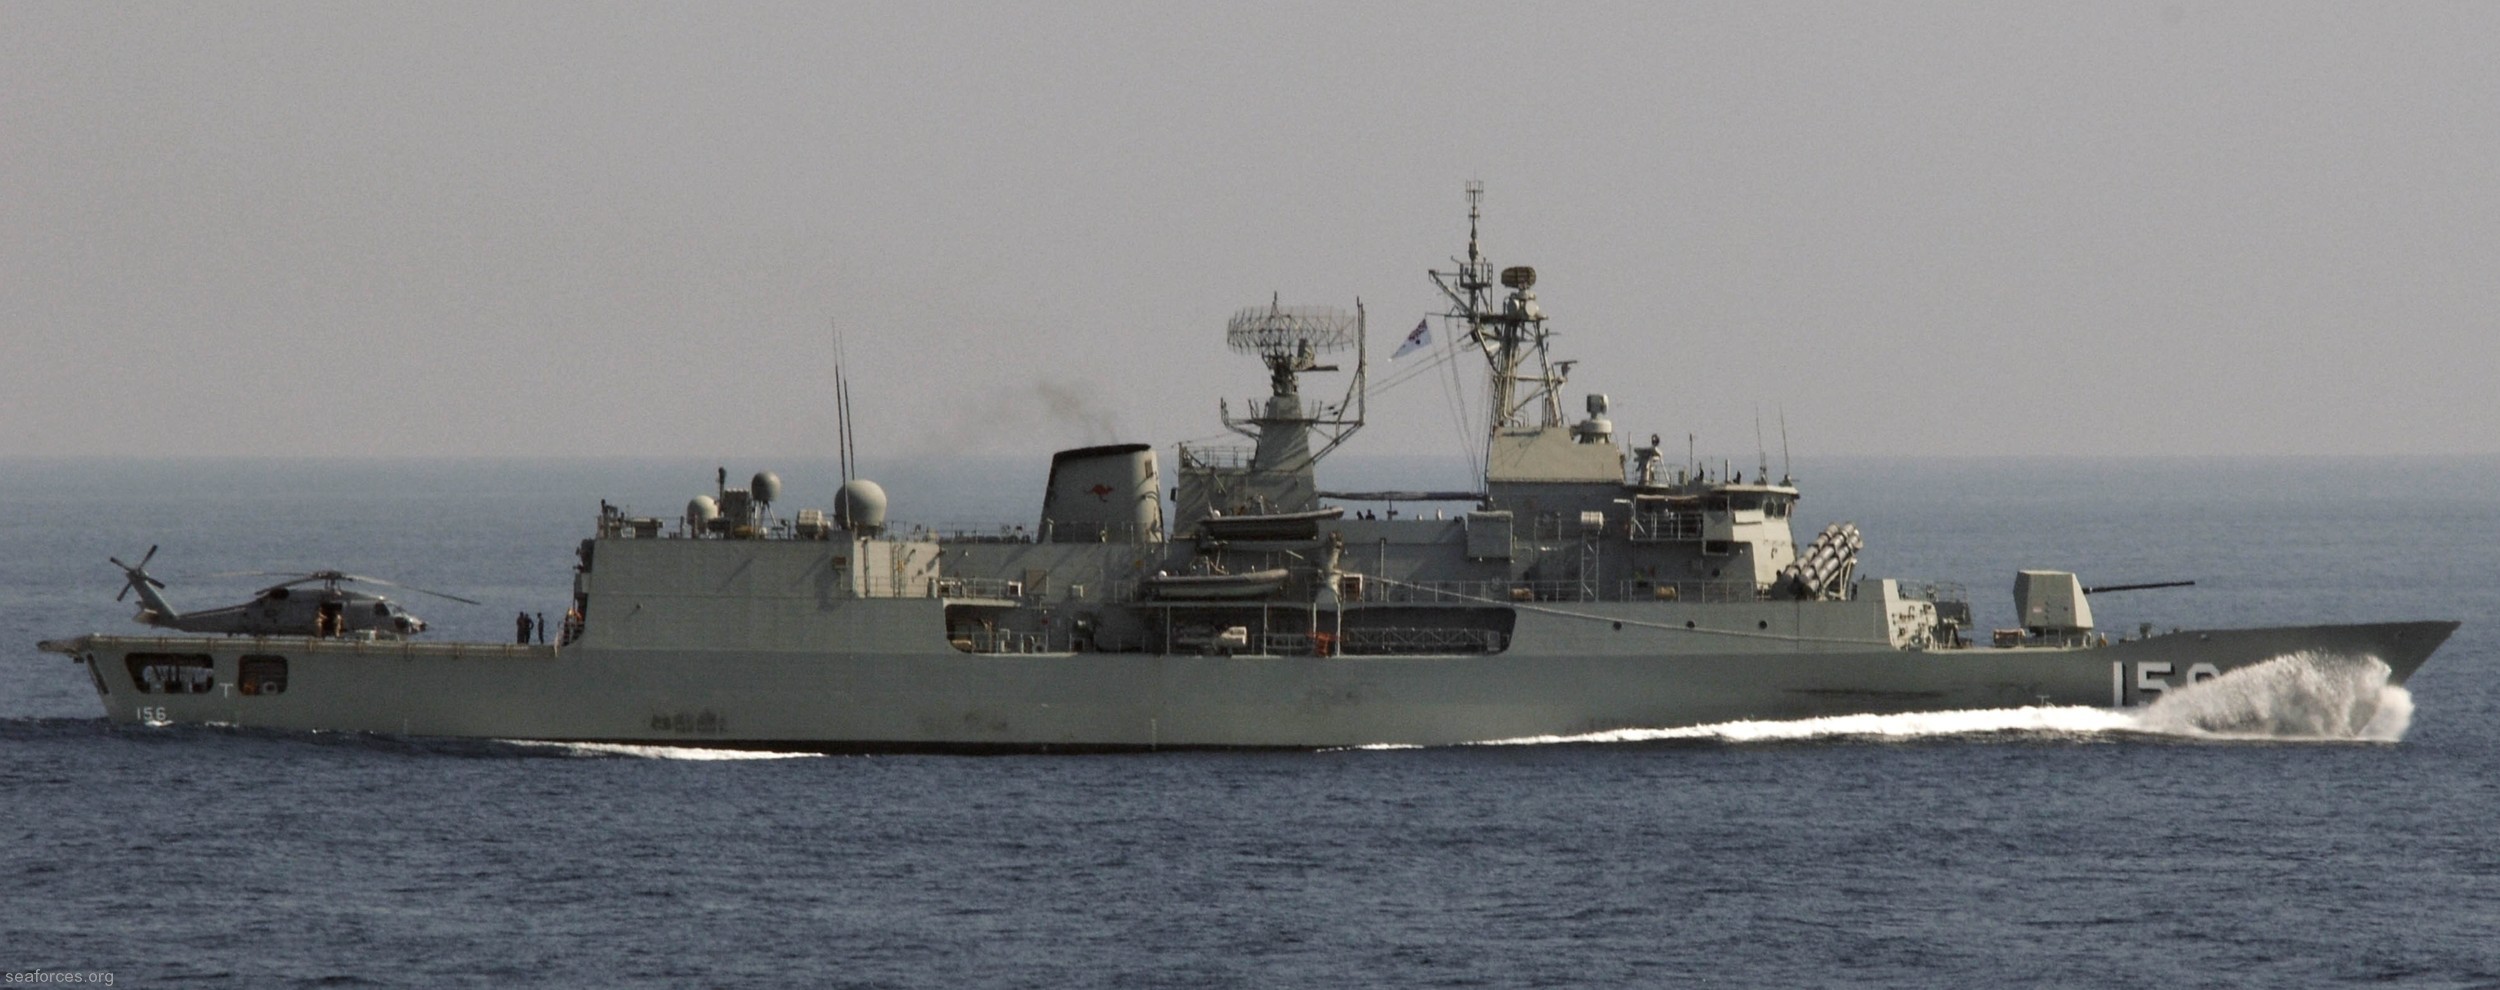 hmas toowomba ffh-156 anzac class frigate royal australian navy